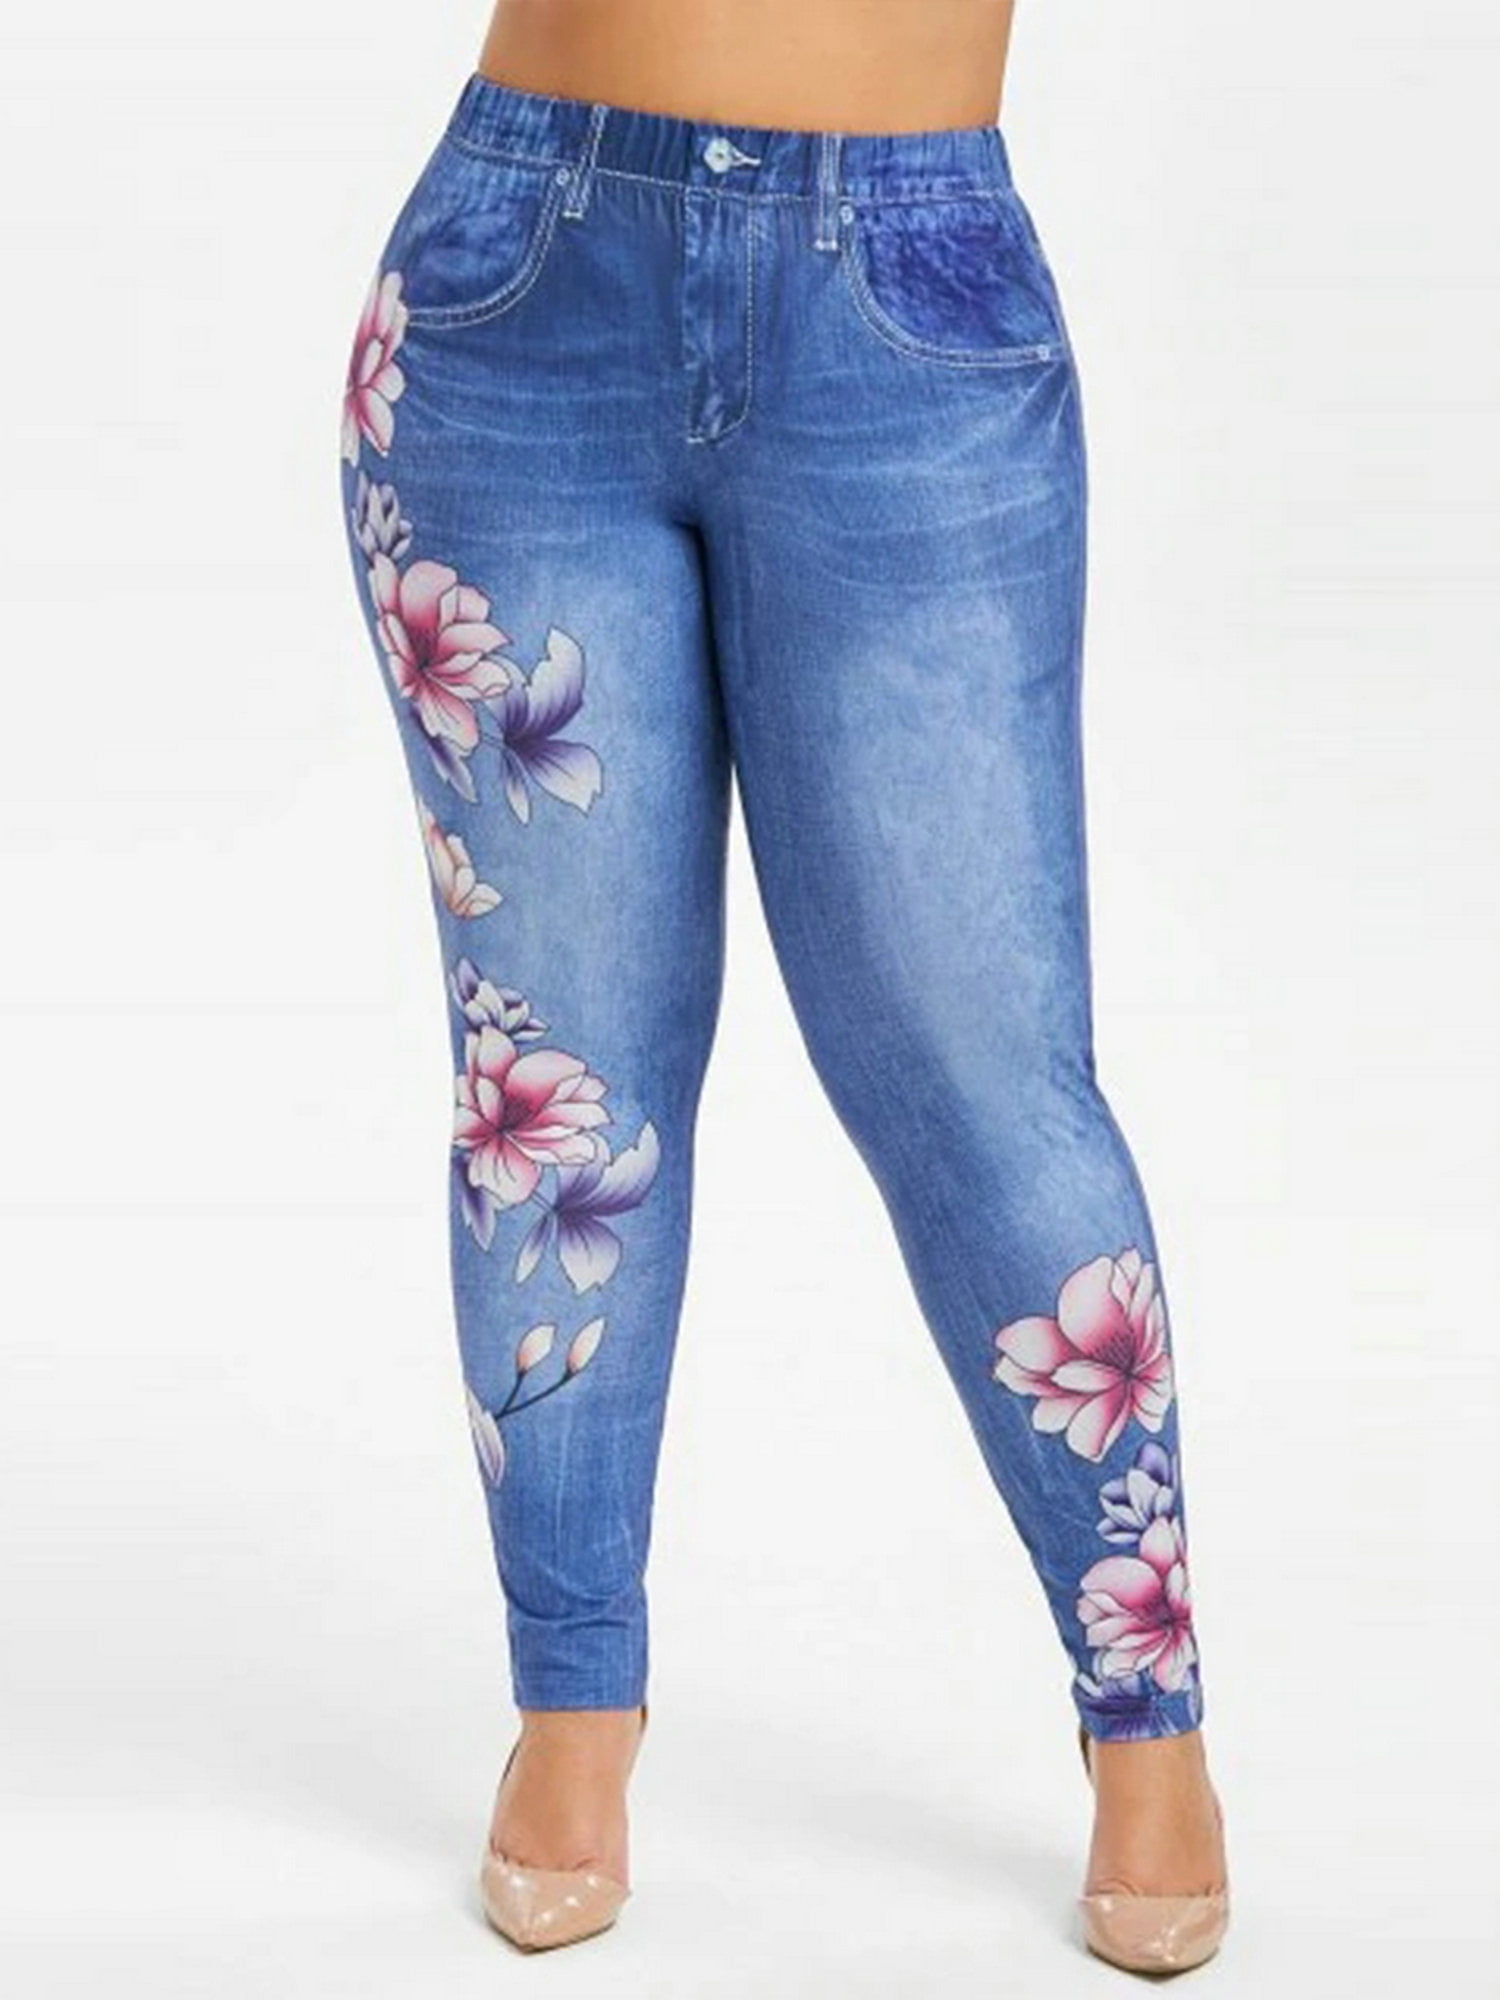 Plus Size Capri Pants for Women Stretch Skinny Jeggings Floral